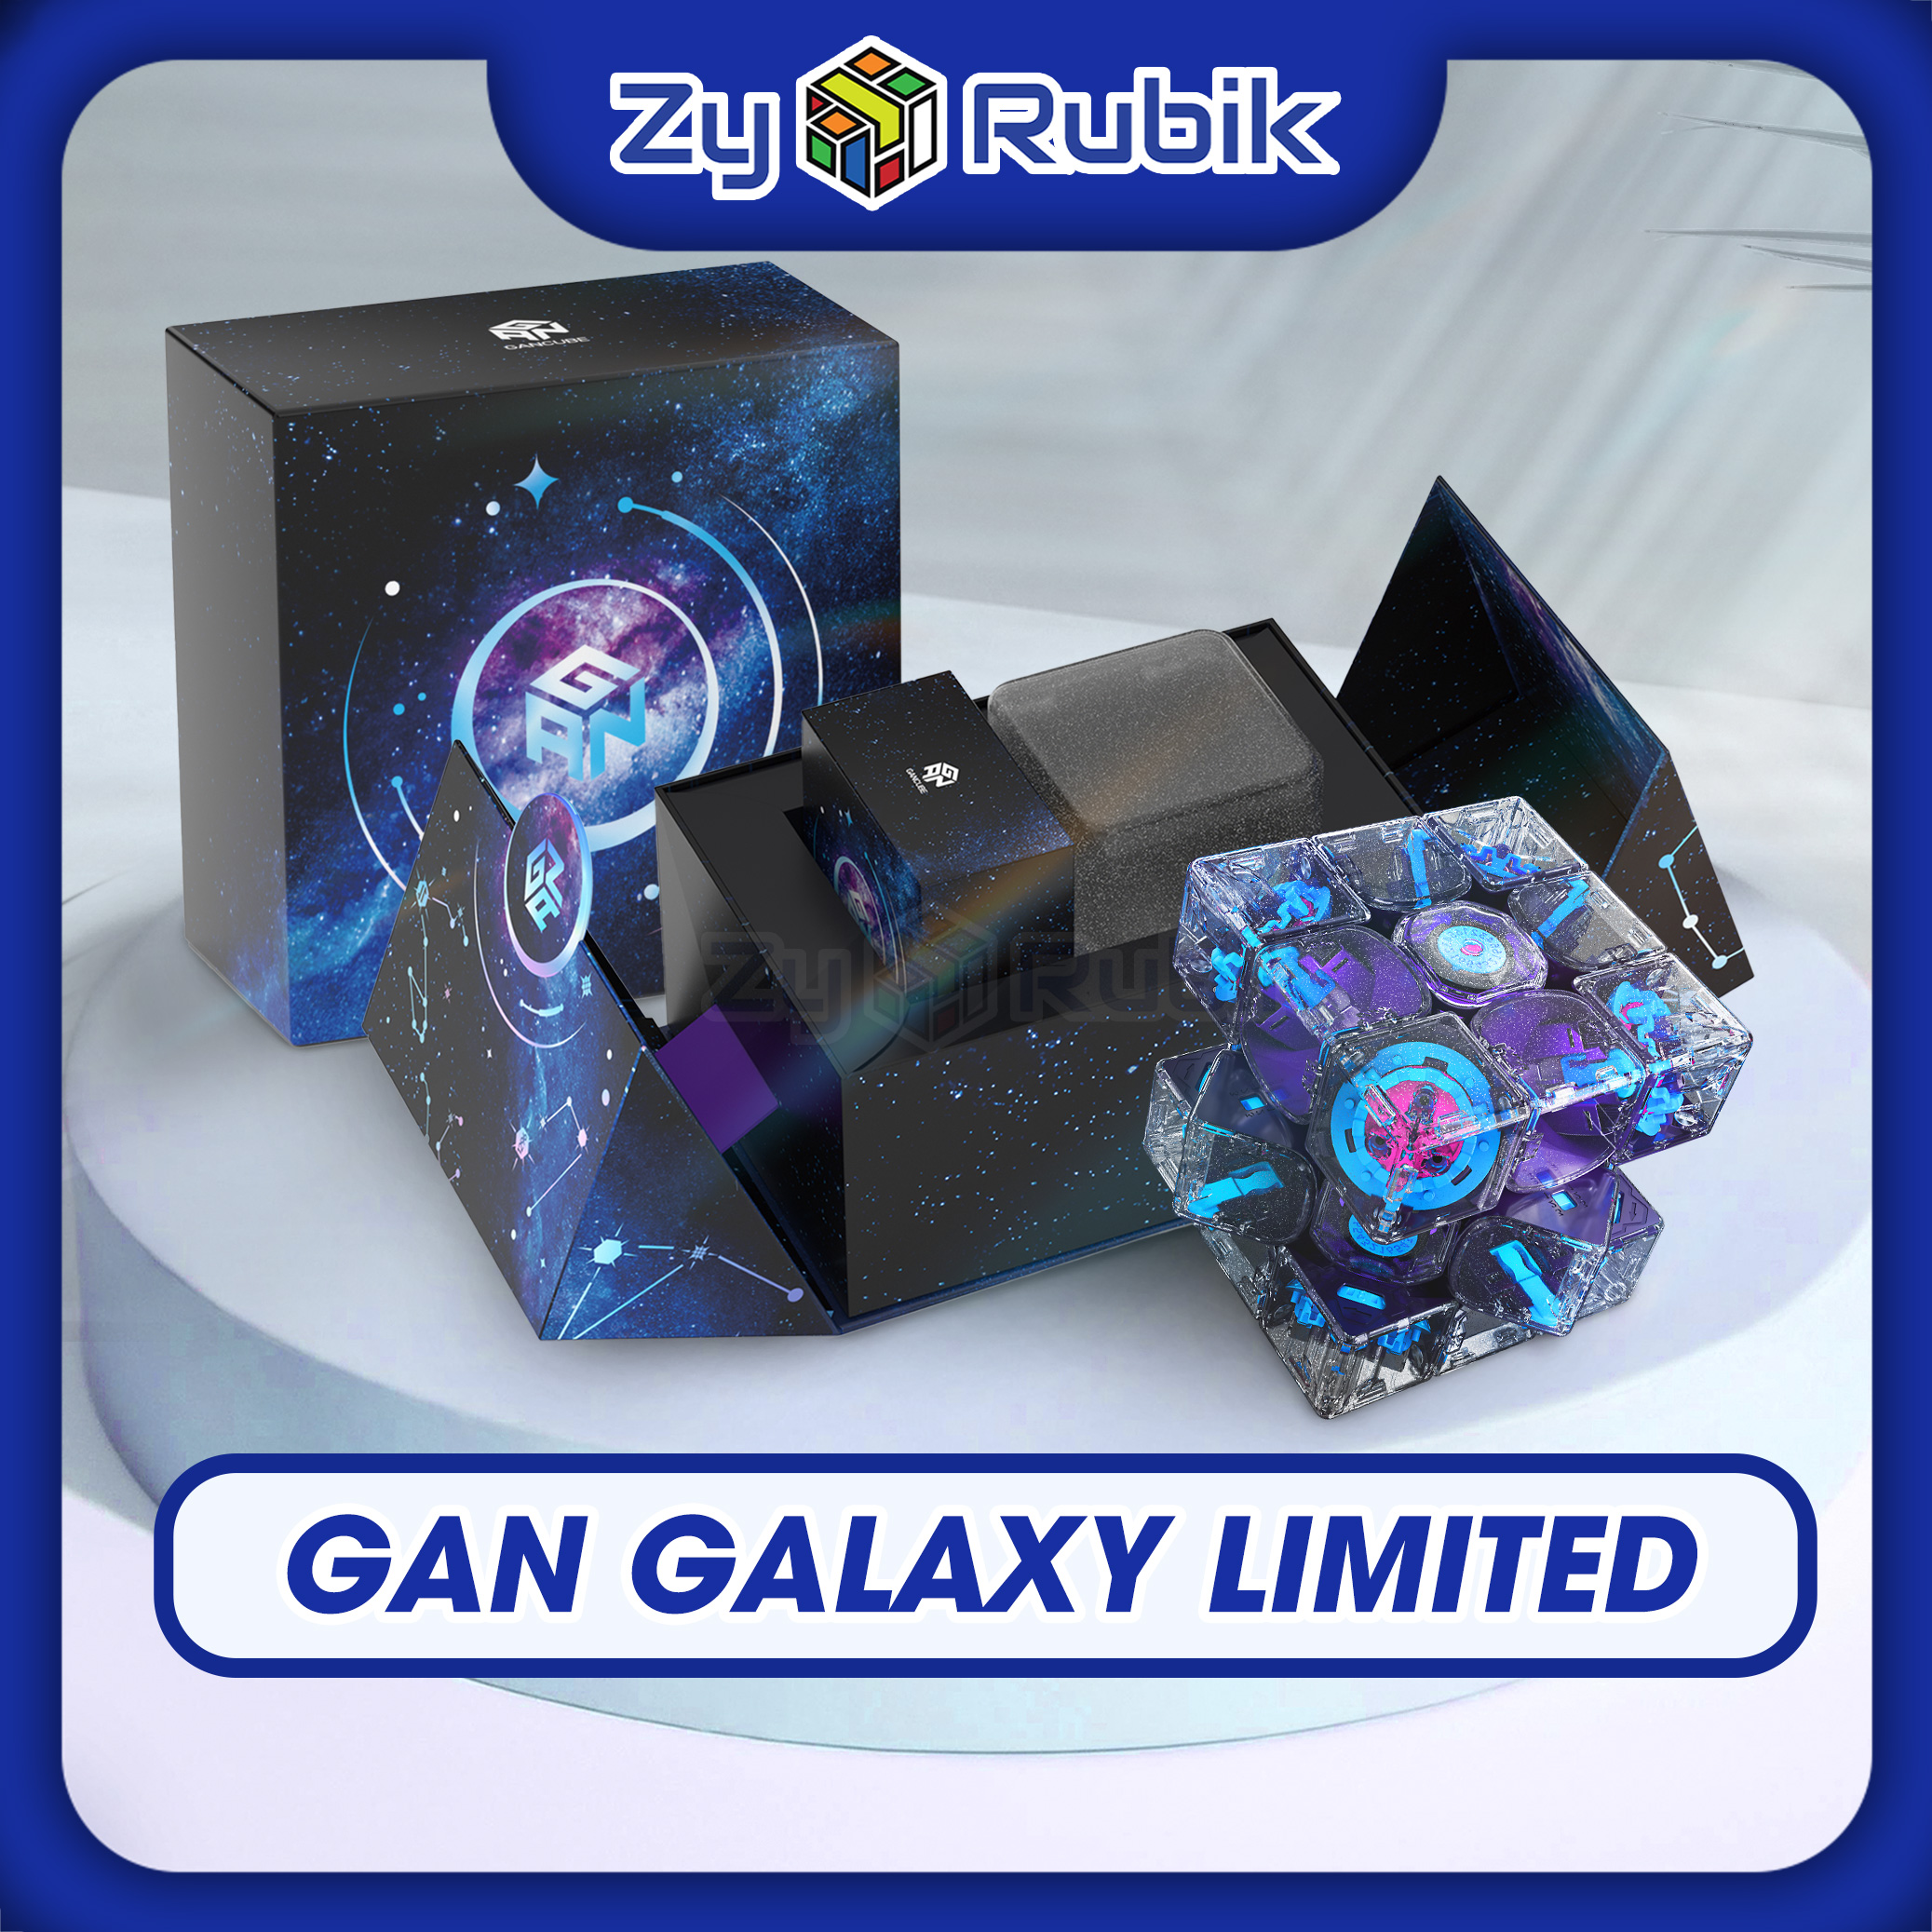 Rubik Gan 14 Limited Galaxy - Gan 14 Galaxy Maglev Limited Phiên Bản Giới Hạn 2023 - Zyo Rubik